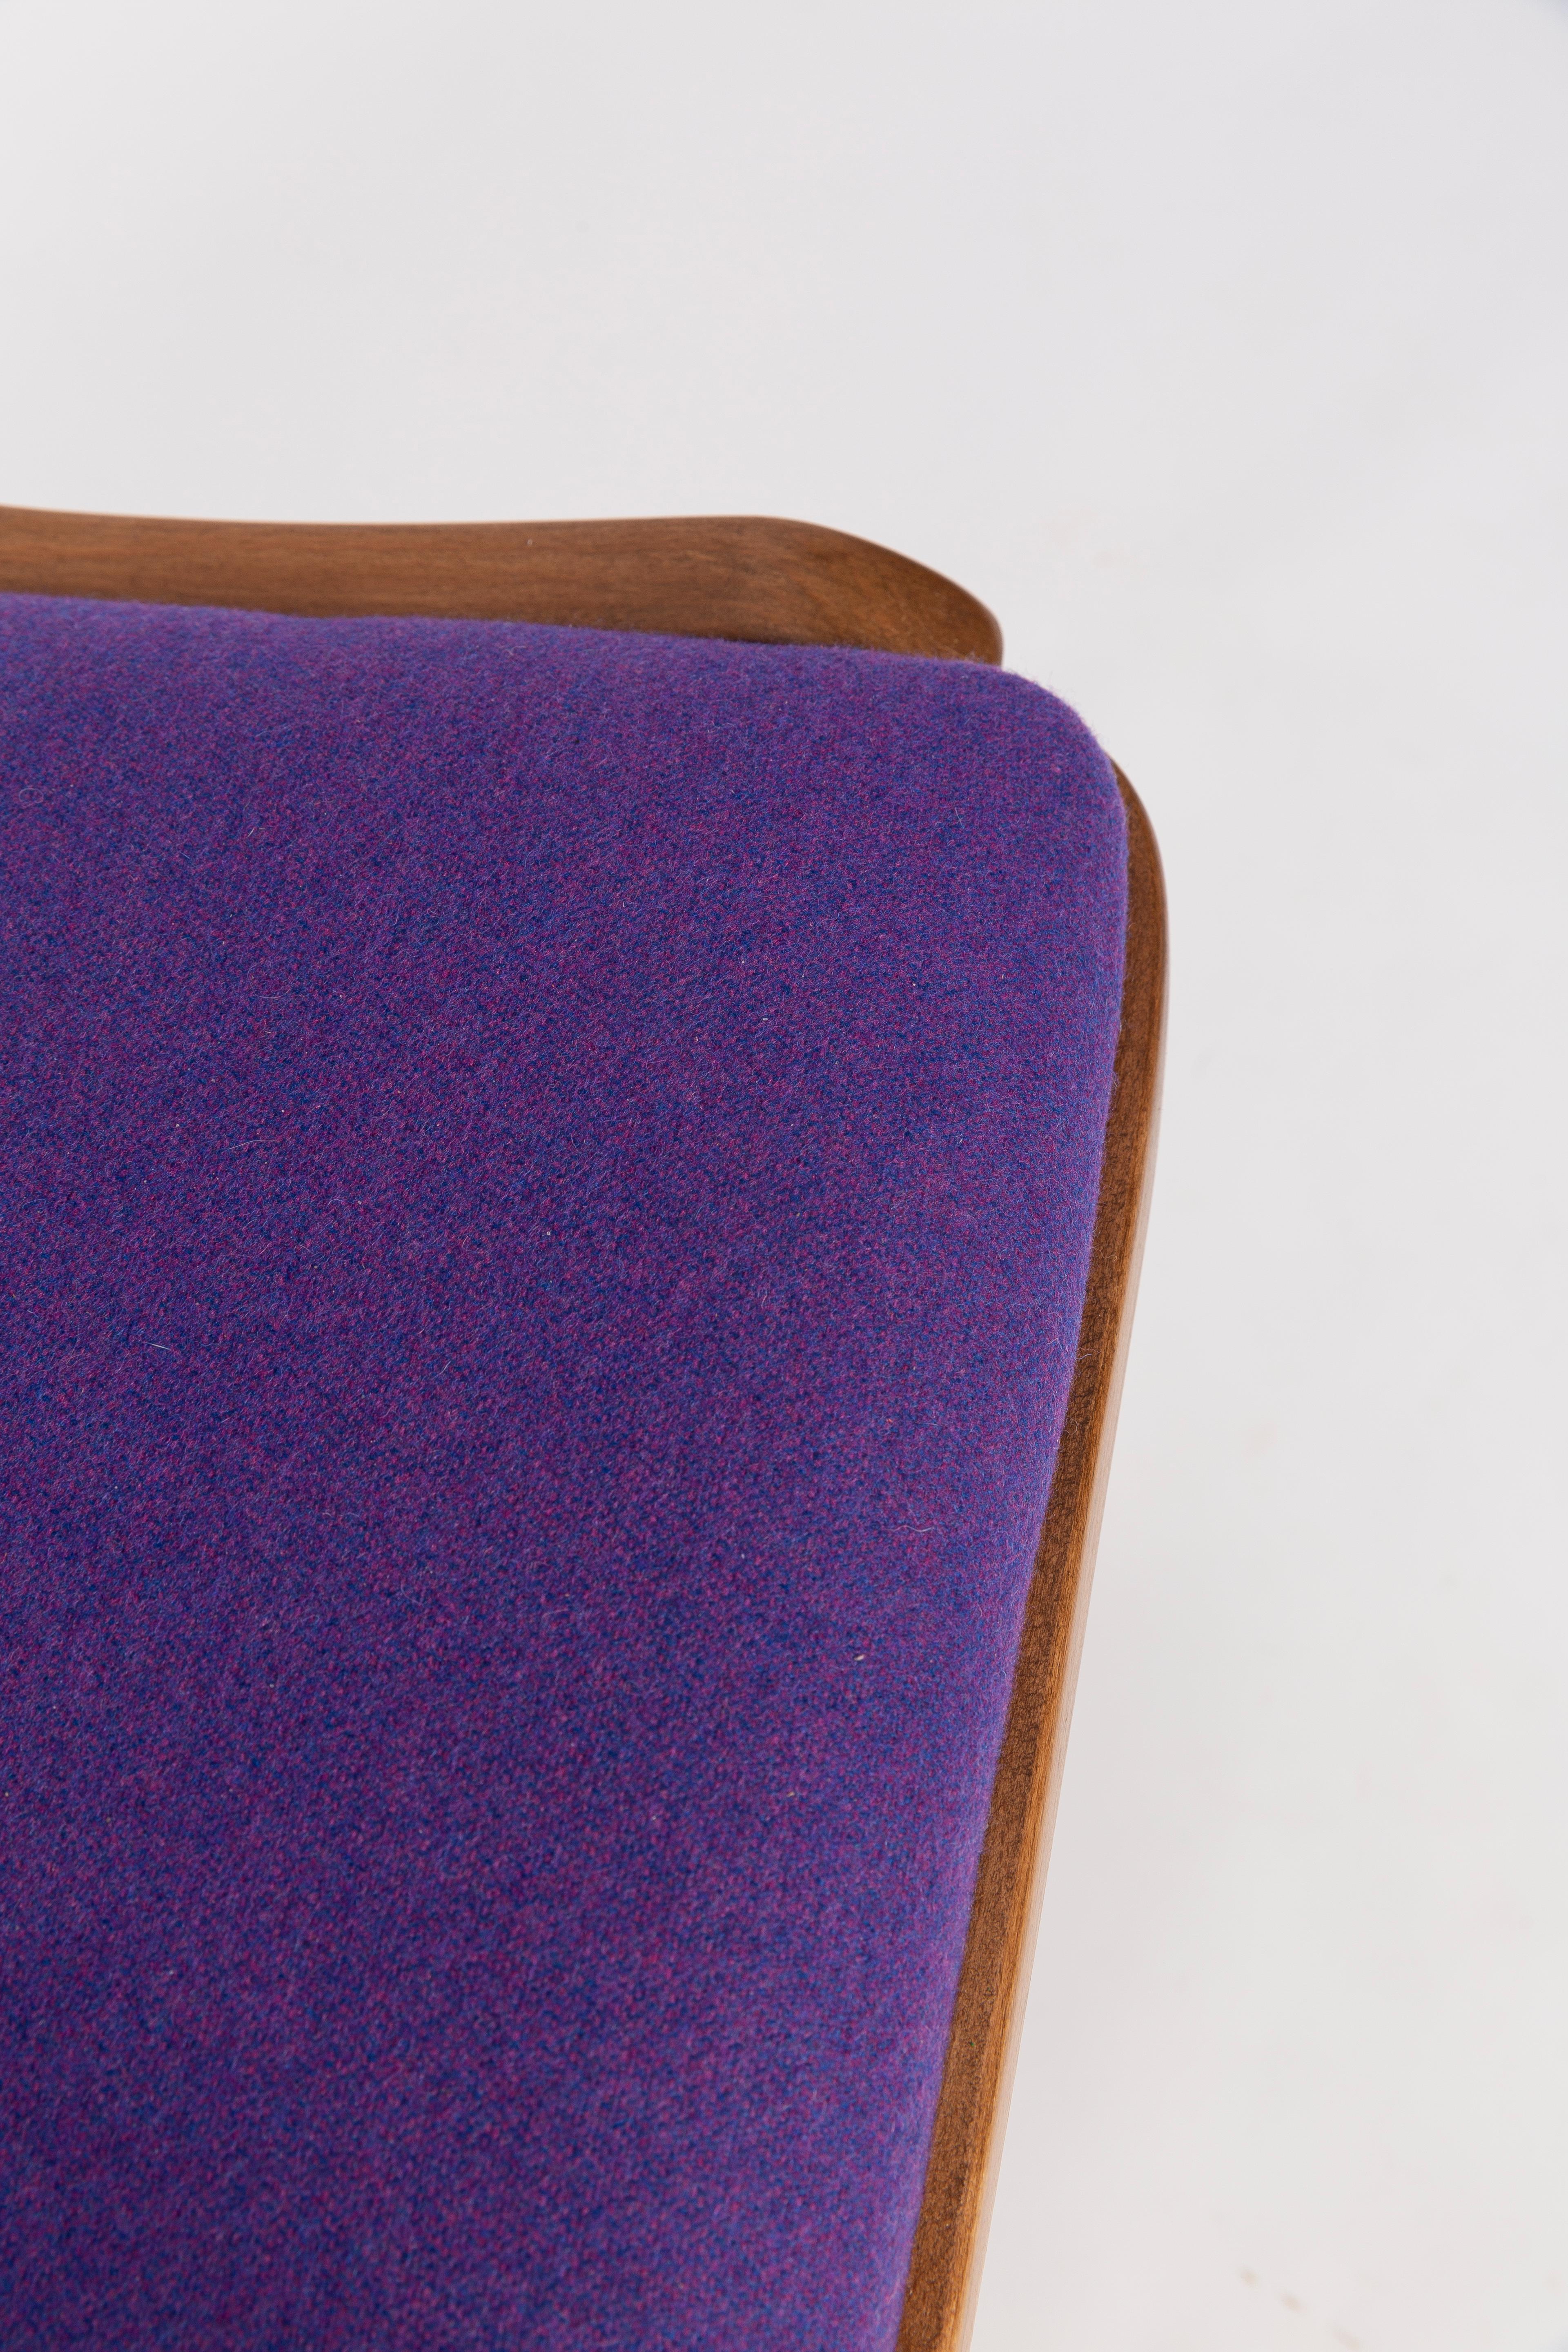 Mid Century Modern Bumerang Chair, Purple Violet Wool, Poland, 1960s In Excellent Condition For Sale In 05-080 Hornowek, PL